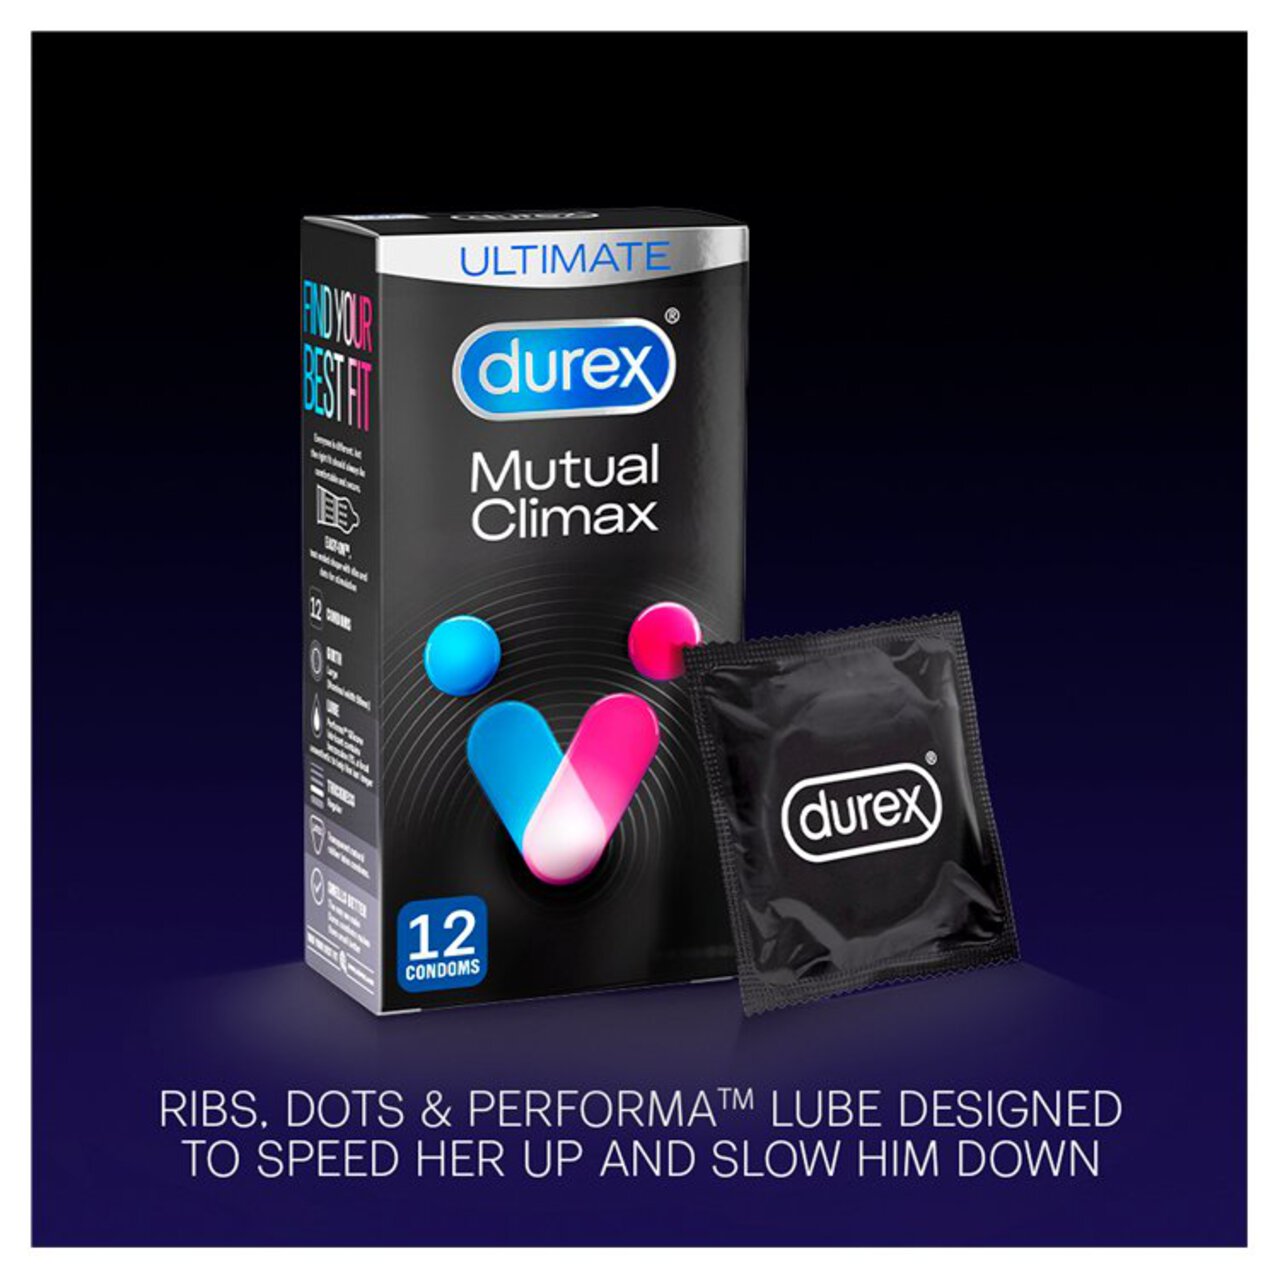 Durex Mutual Climax 12 Condoms 12 per pack